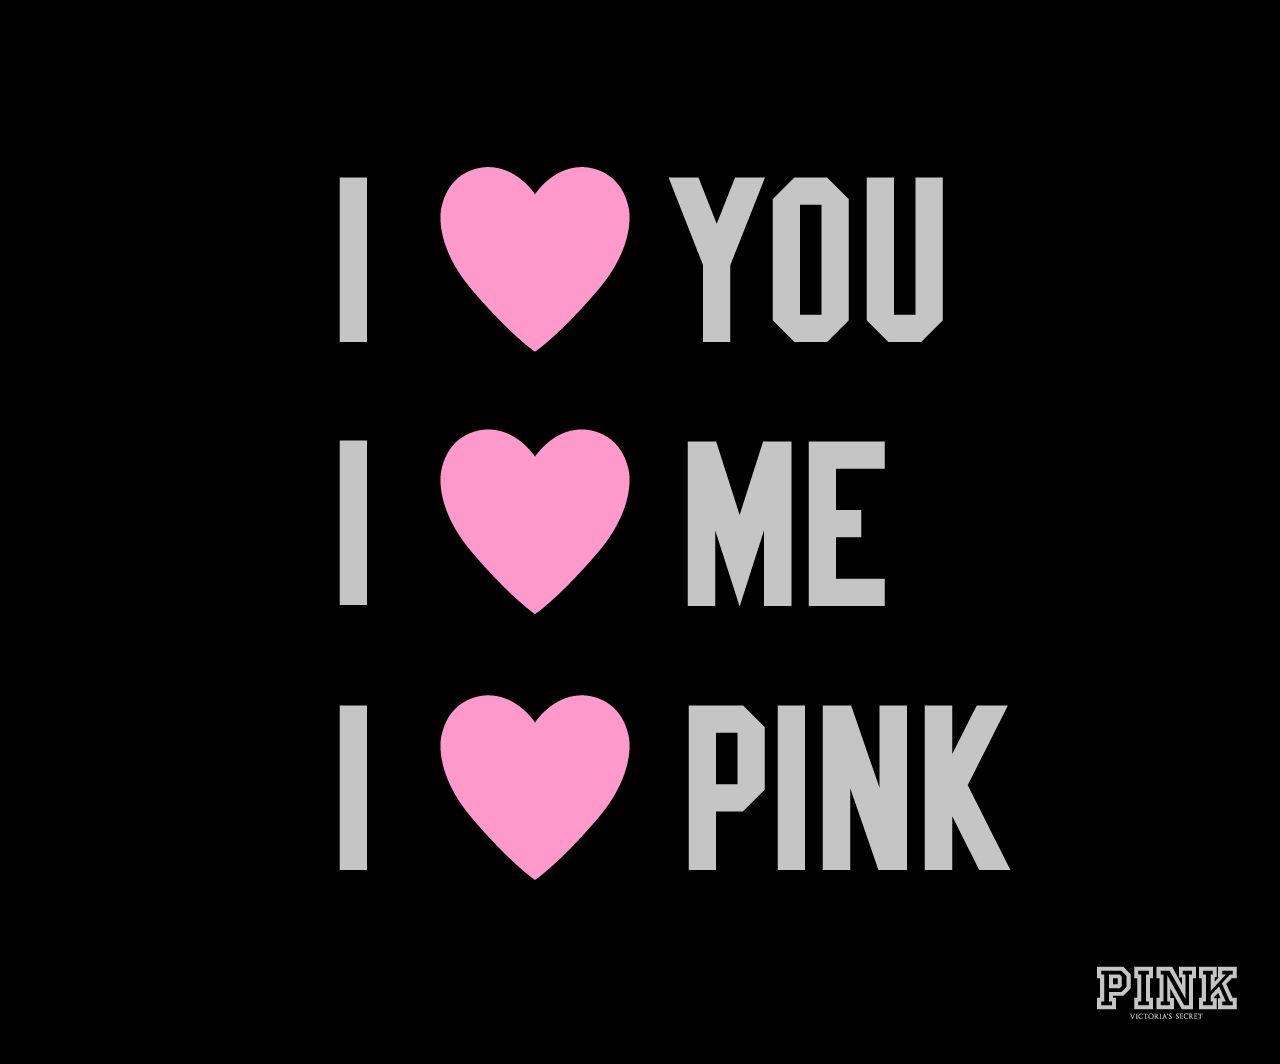 Love Pink Victoria Secret Logo - love pink victoria secret - Google Search on We Heart It